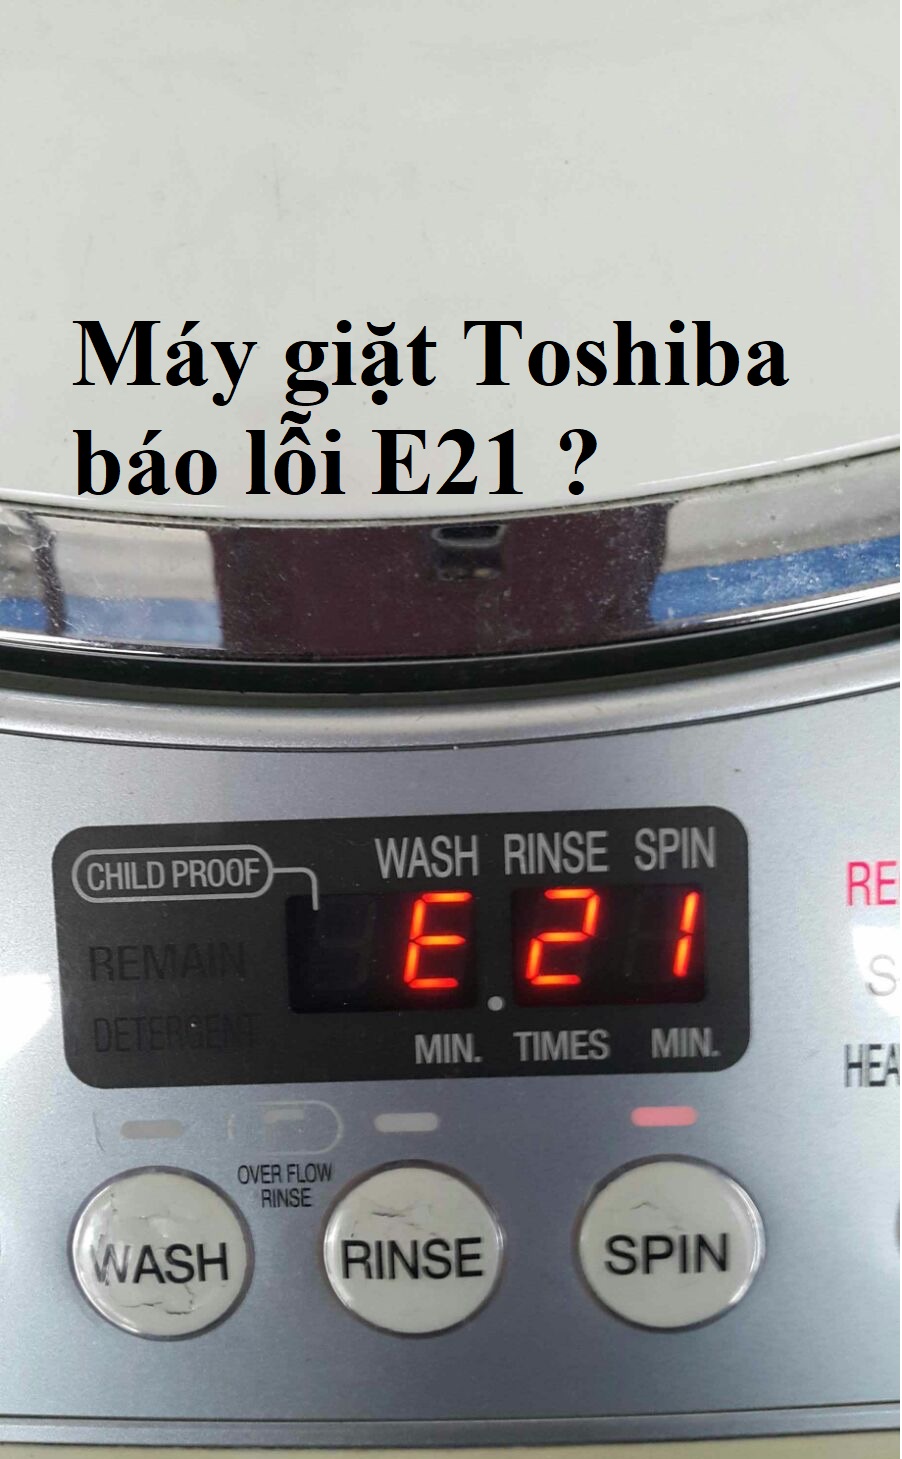 may giat toshiba bao loi e21